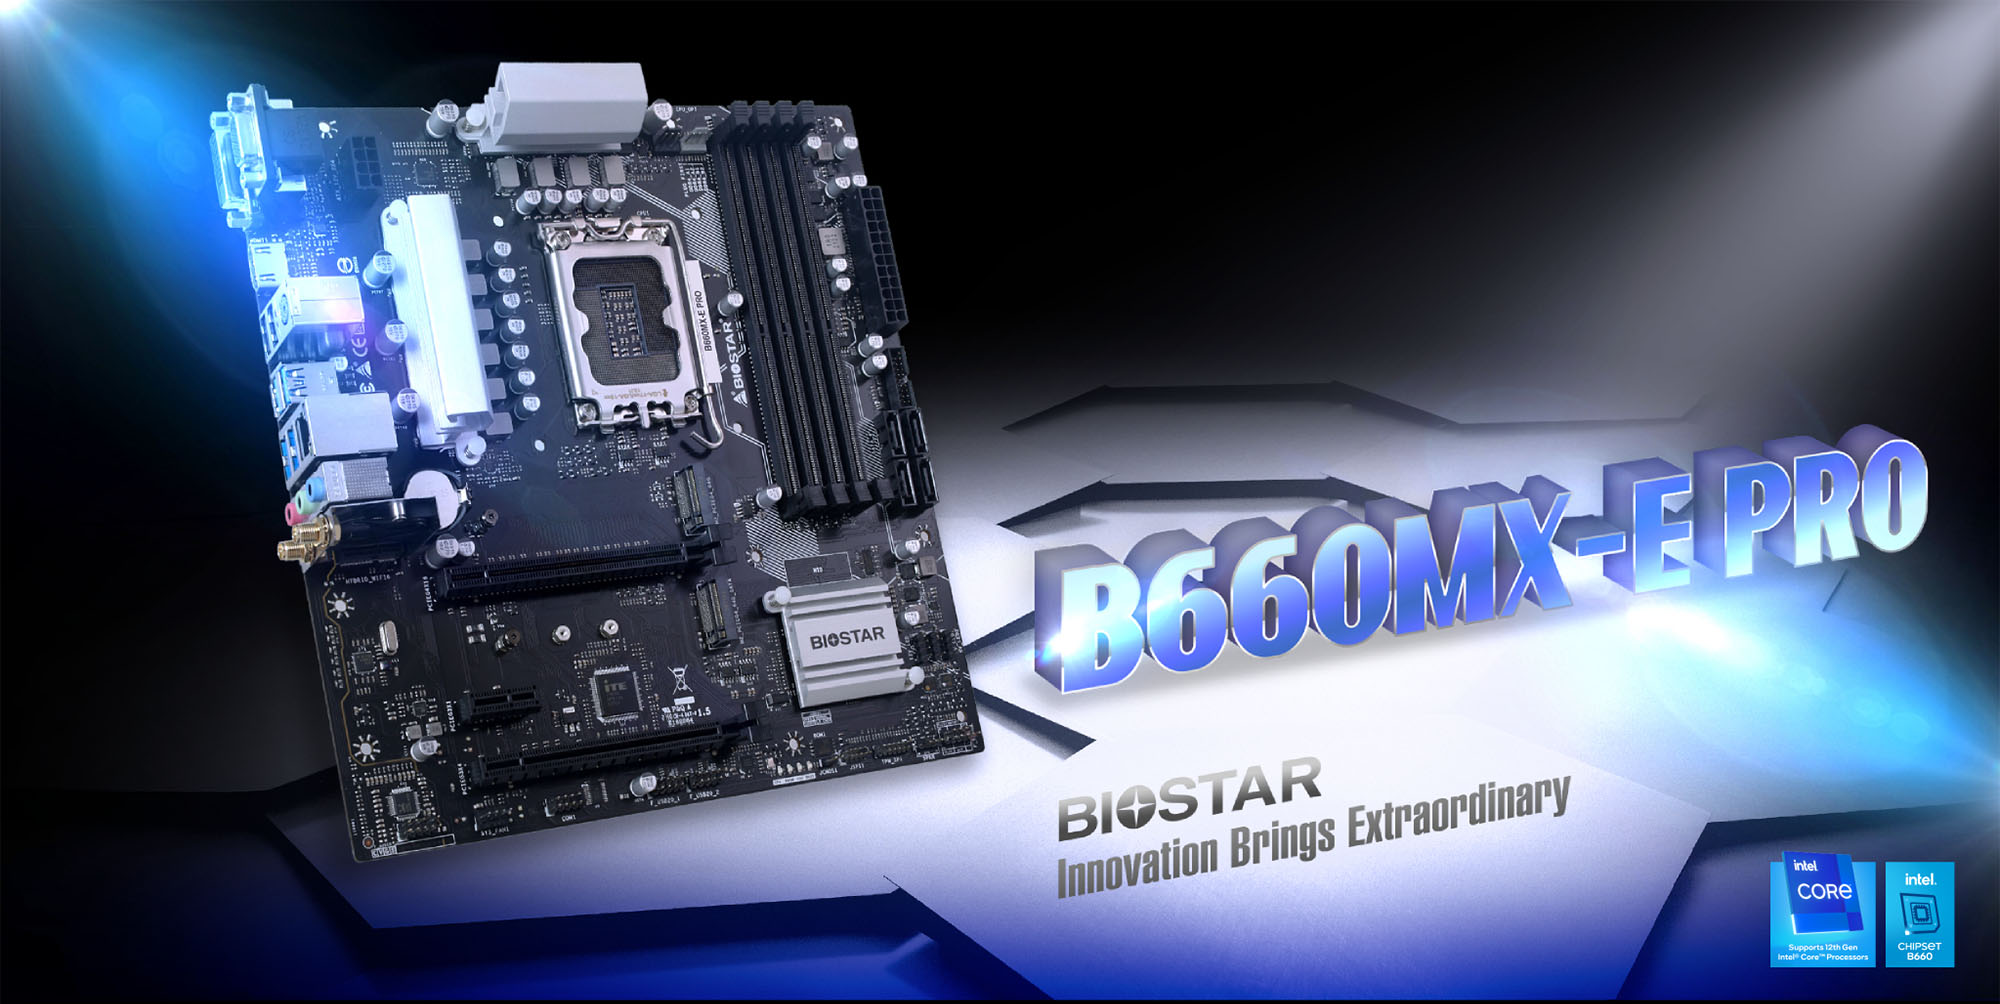 B660MX-E PRO｜BIOSTAR｜株式会社アユート PCパーツ・VR・オーディオ等